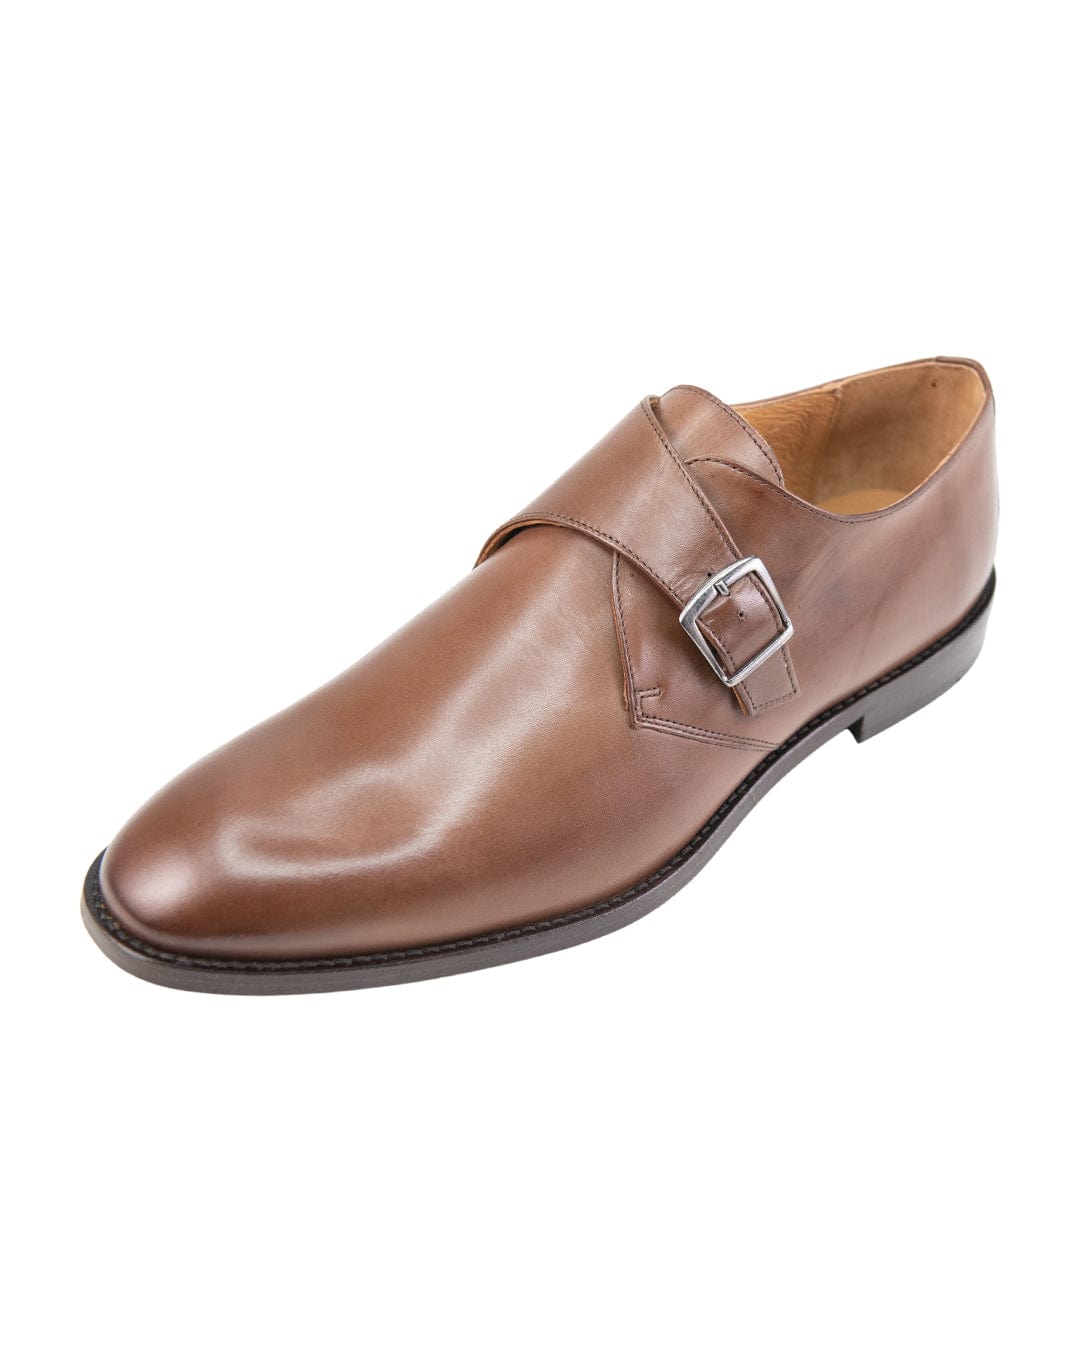 Gagliardi Shoes Gagliardi Brown Leather Single Buckle Monk Strap Shoes